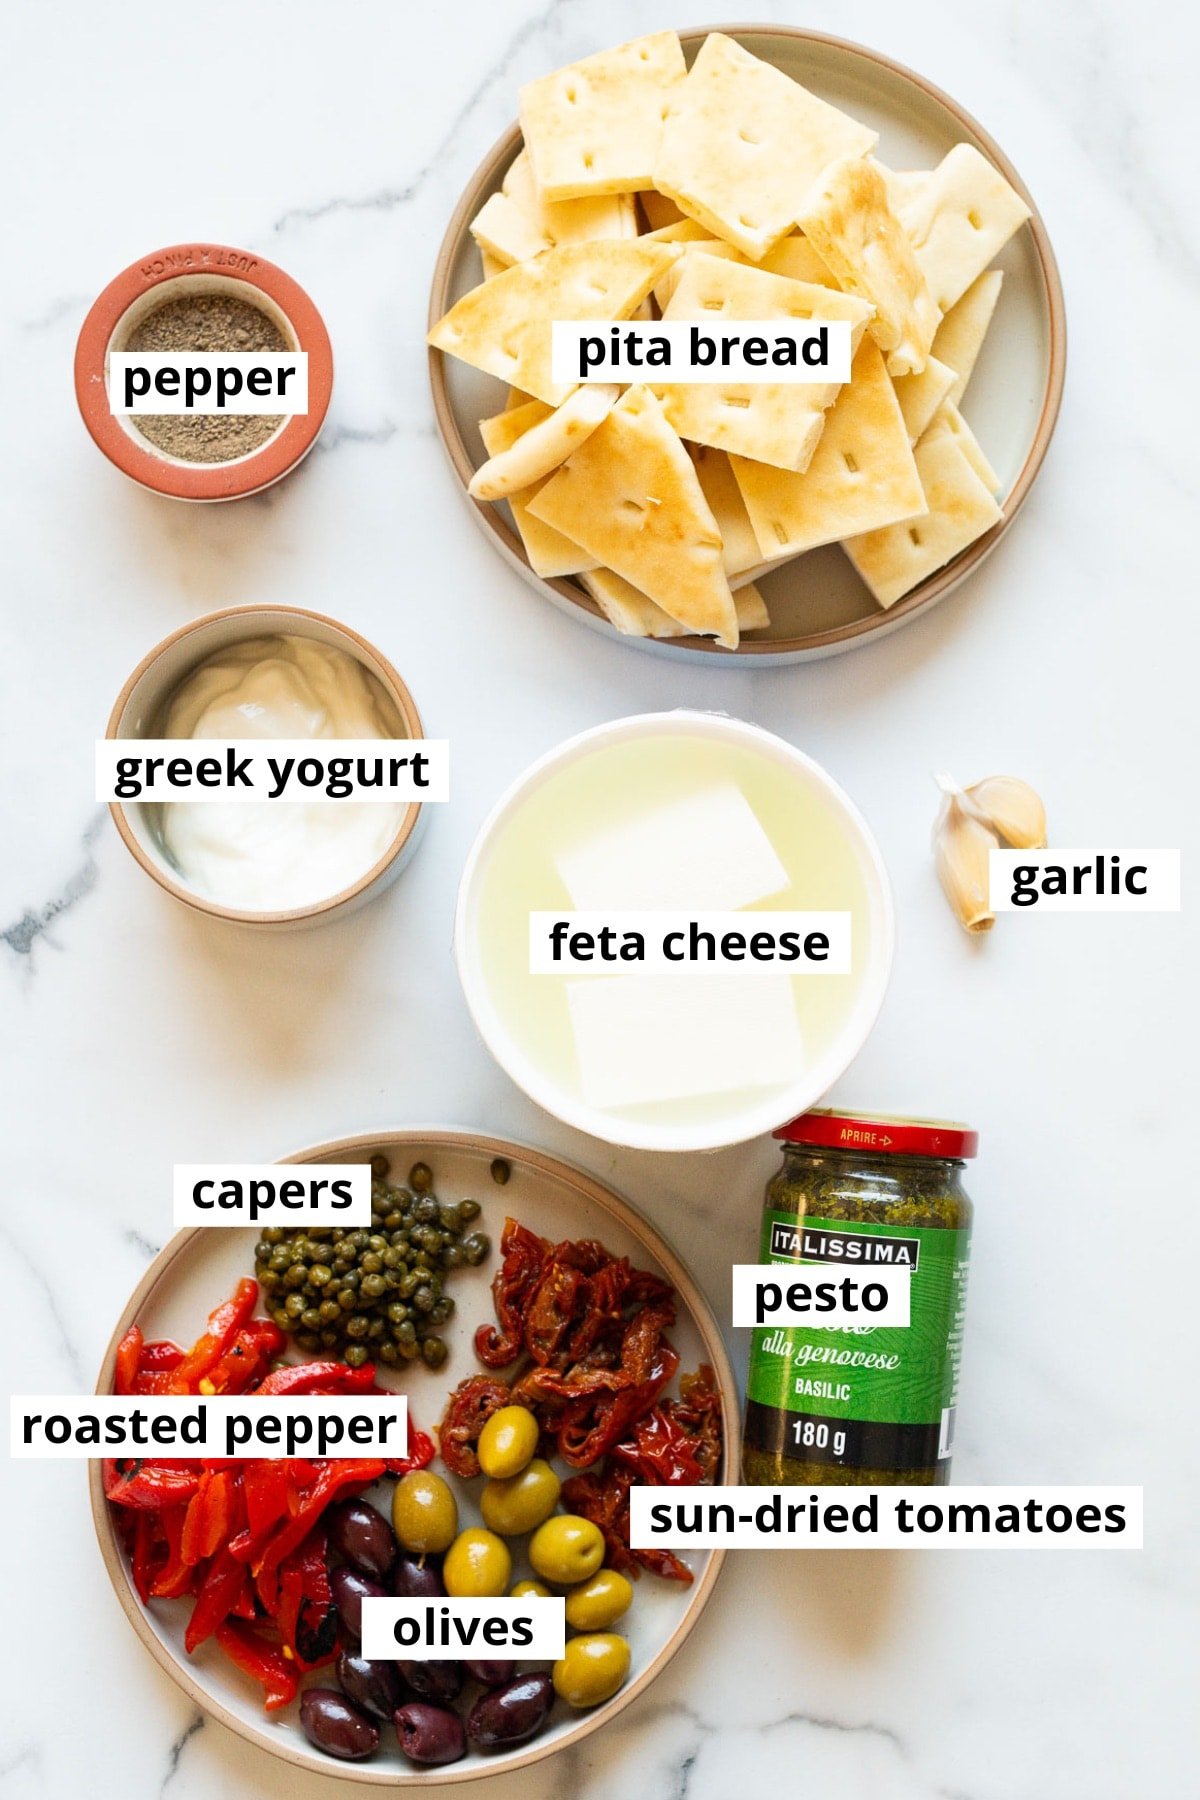 Feta cheese, greek yogurt, garlic, pepper, pita bread, pesto, sun dried tomatoes, capers, roasted pepper, olives.